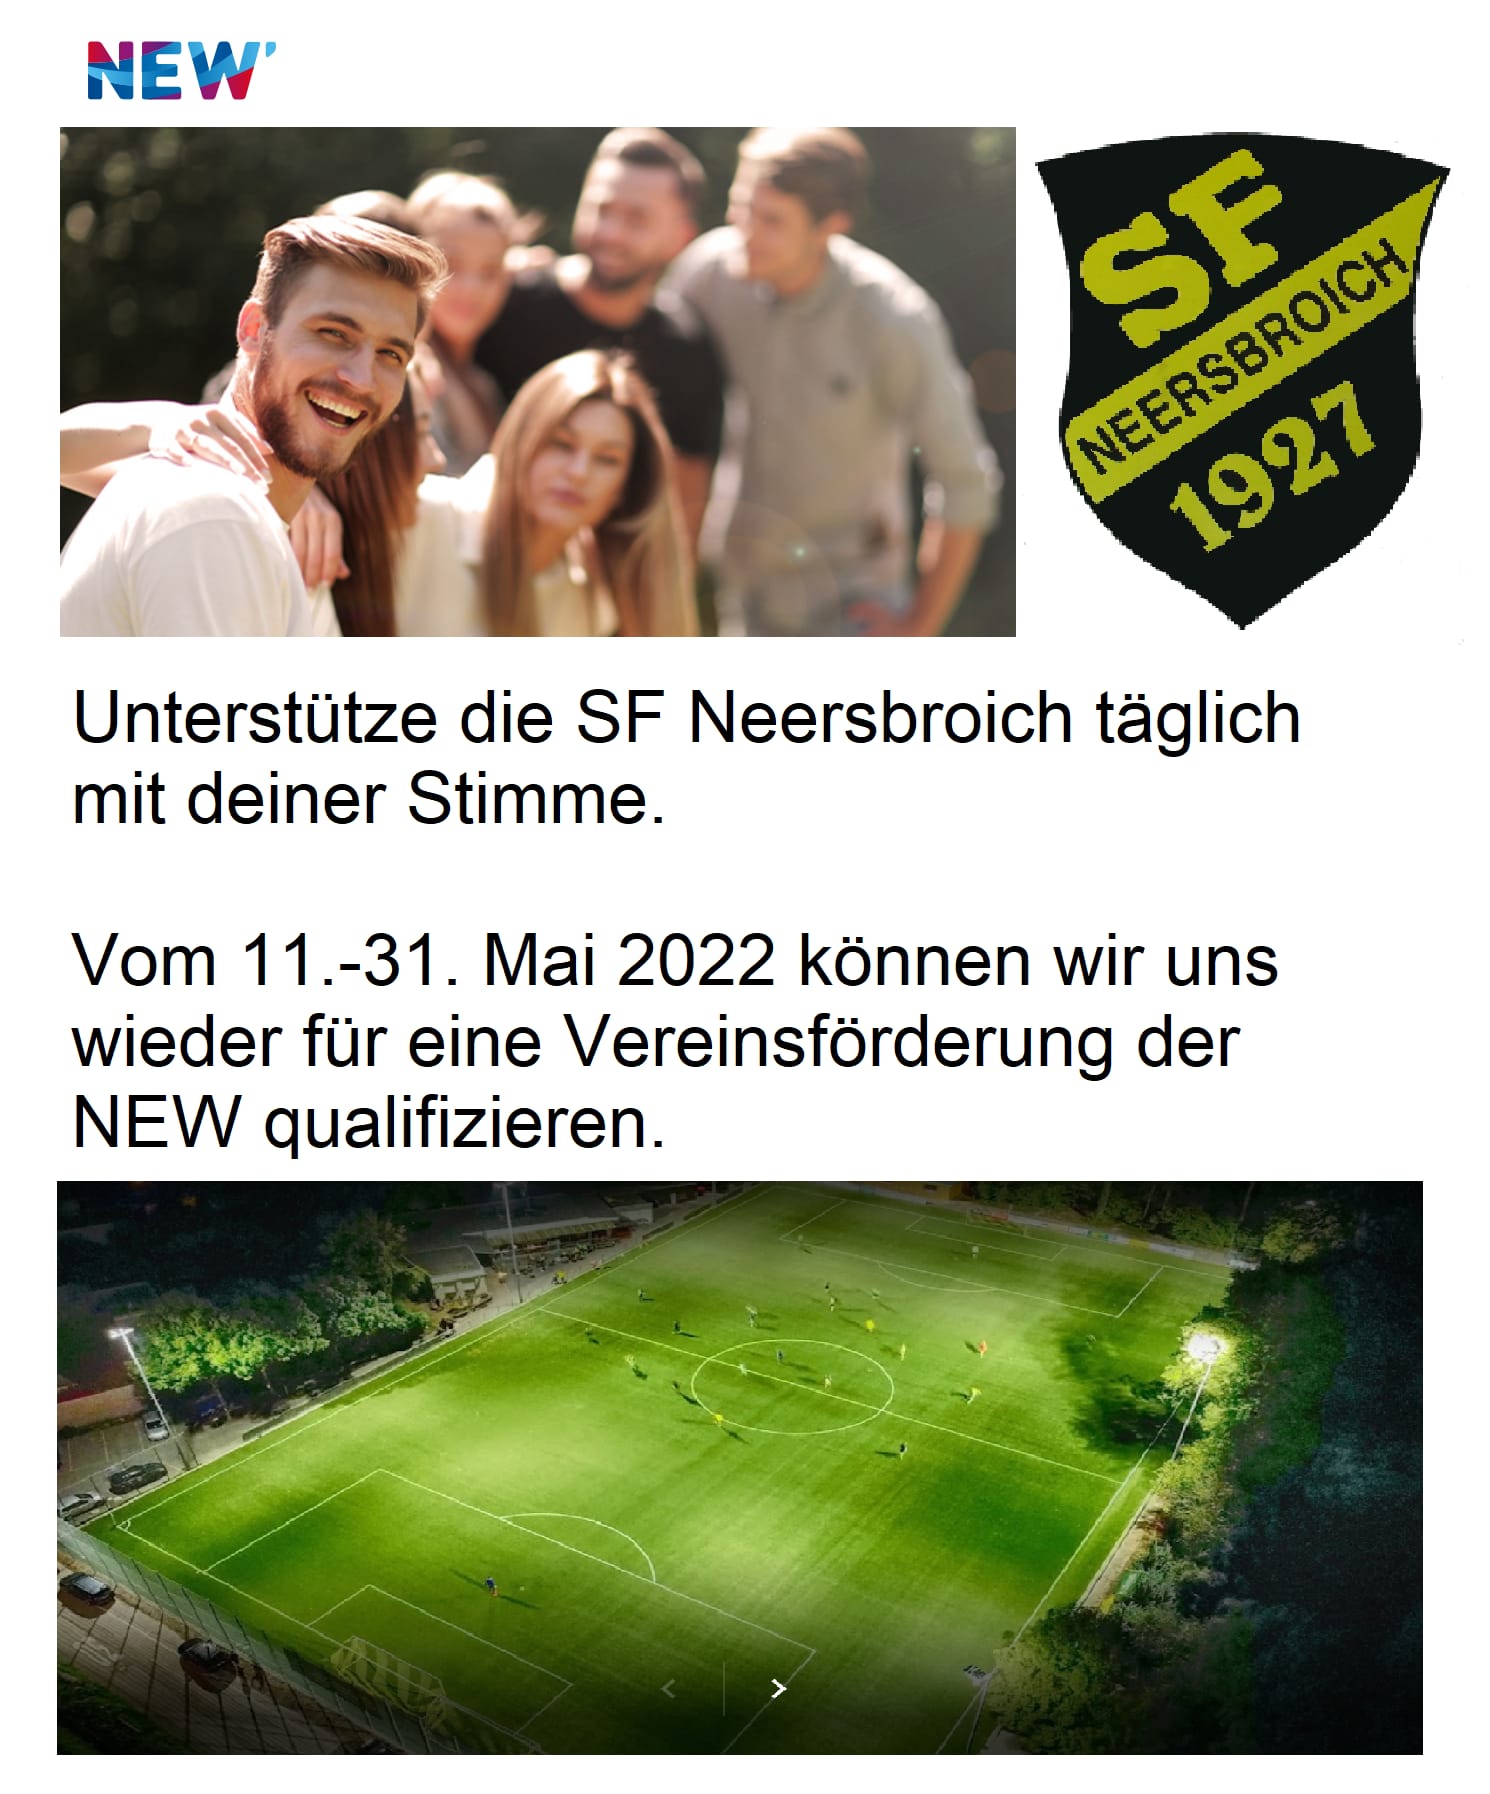 NEW-Vereinsförderung 2022